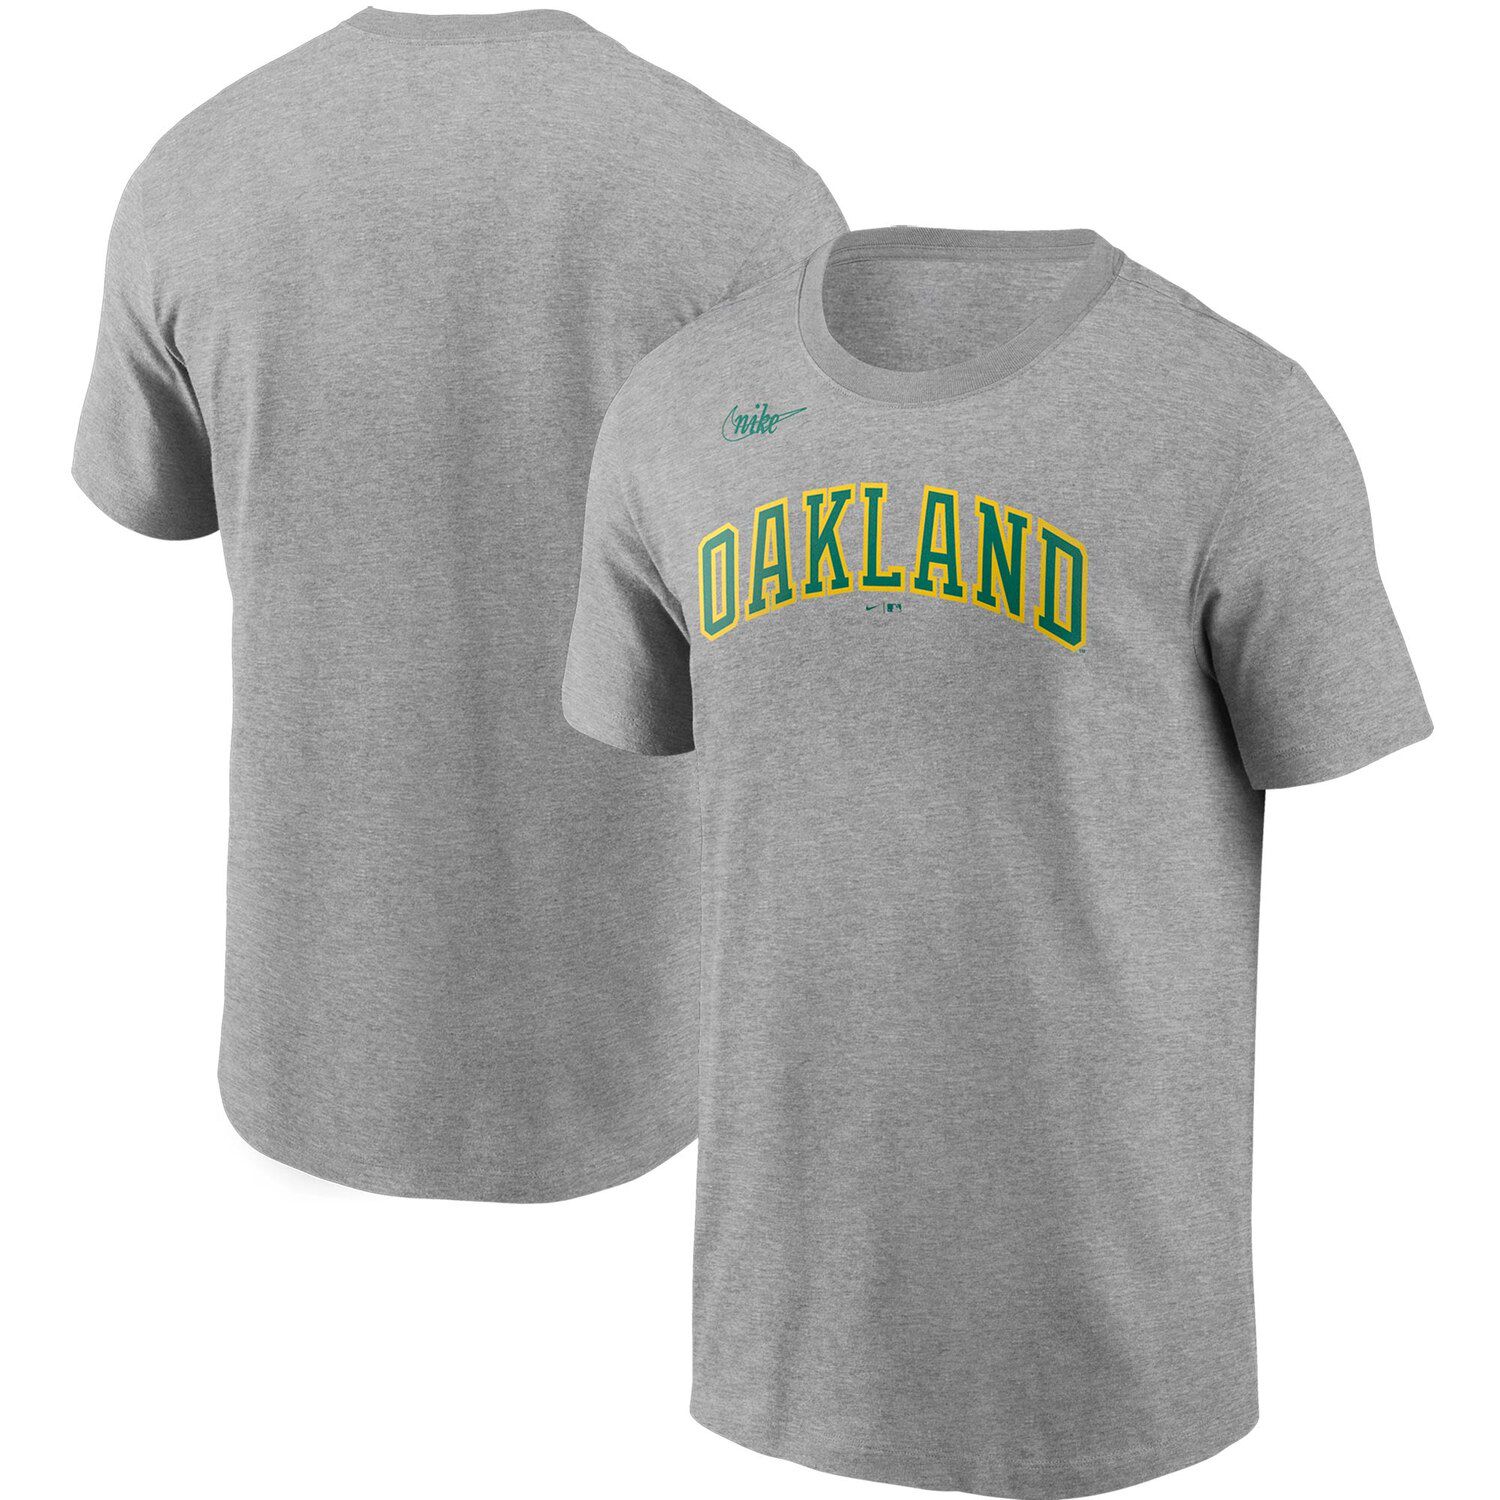 oakland a's men's shirts